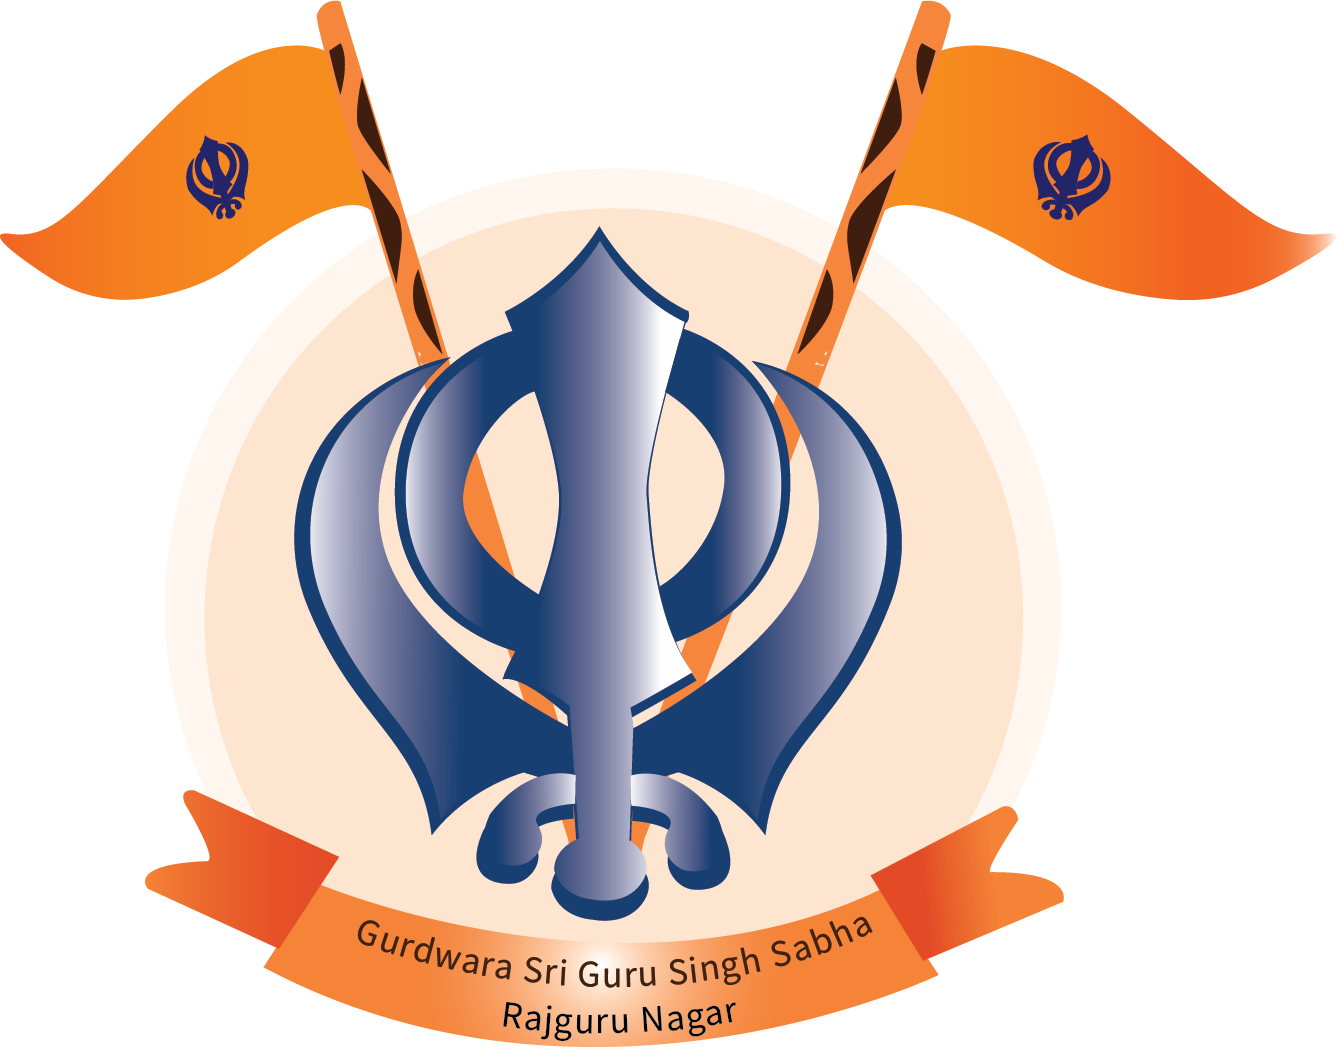 Sri Guru Singh Sabha Southall on X: 